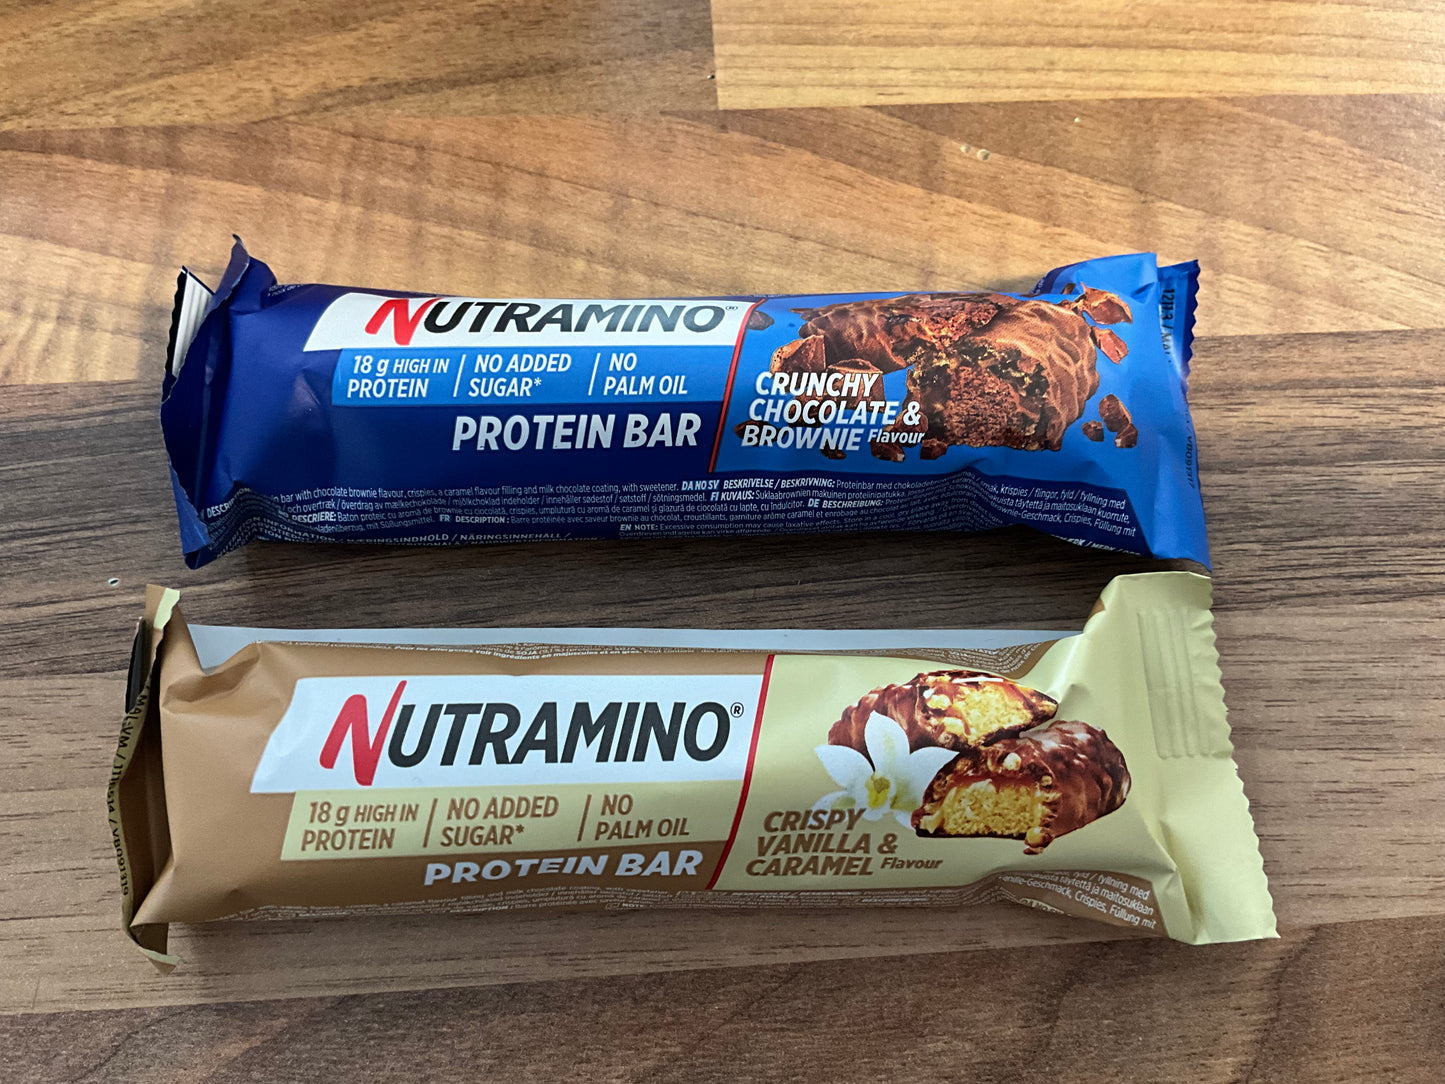 Nutramino Protein Bar Crispy + Crunchy